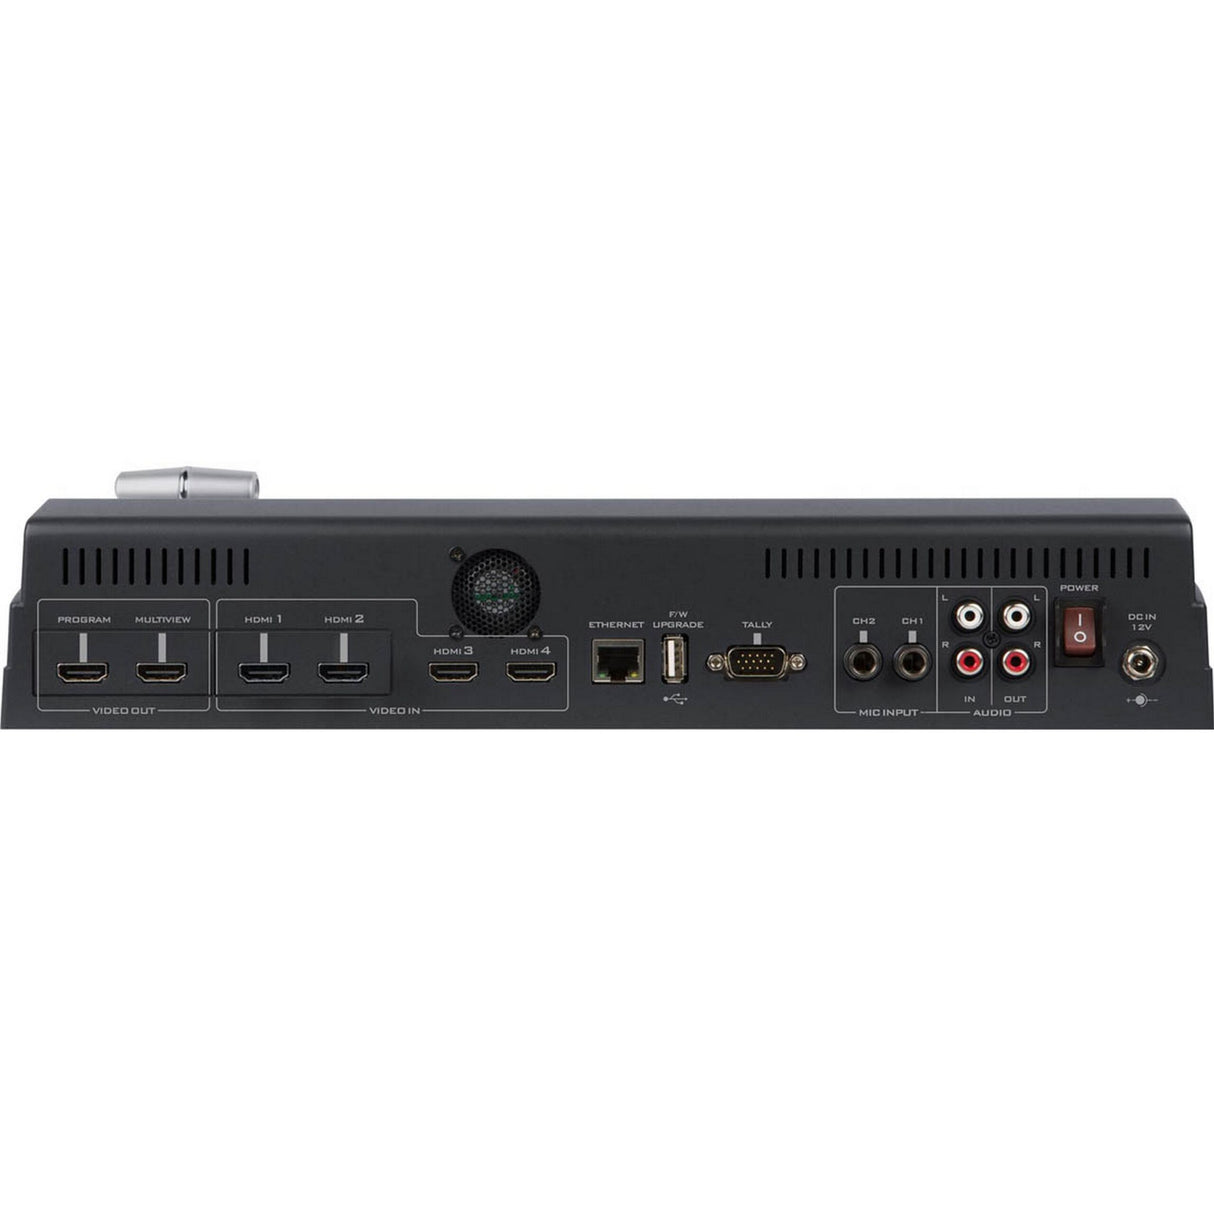 Datavideo SE-500HD 4-Channel 1080p HDMI Video Presentation Switcher